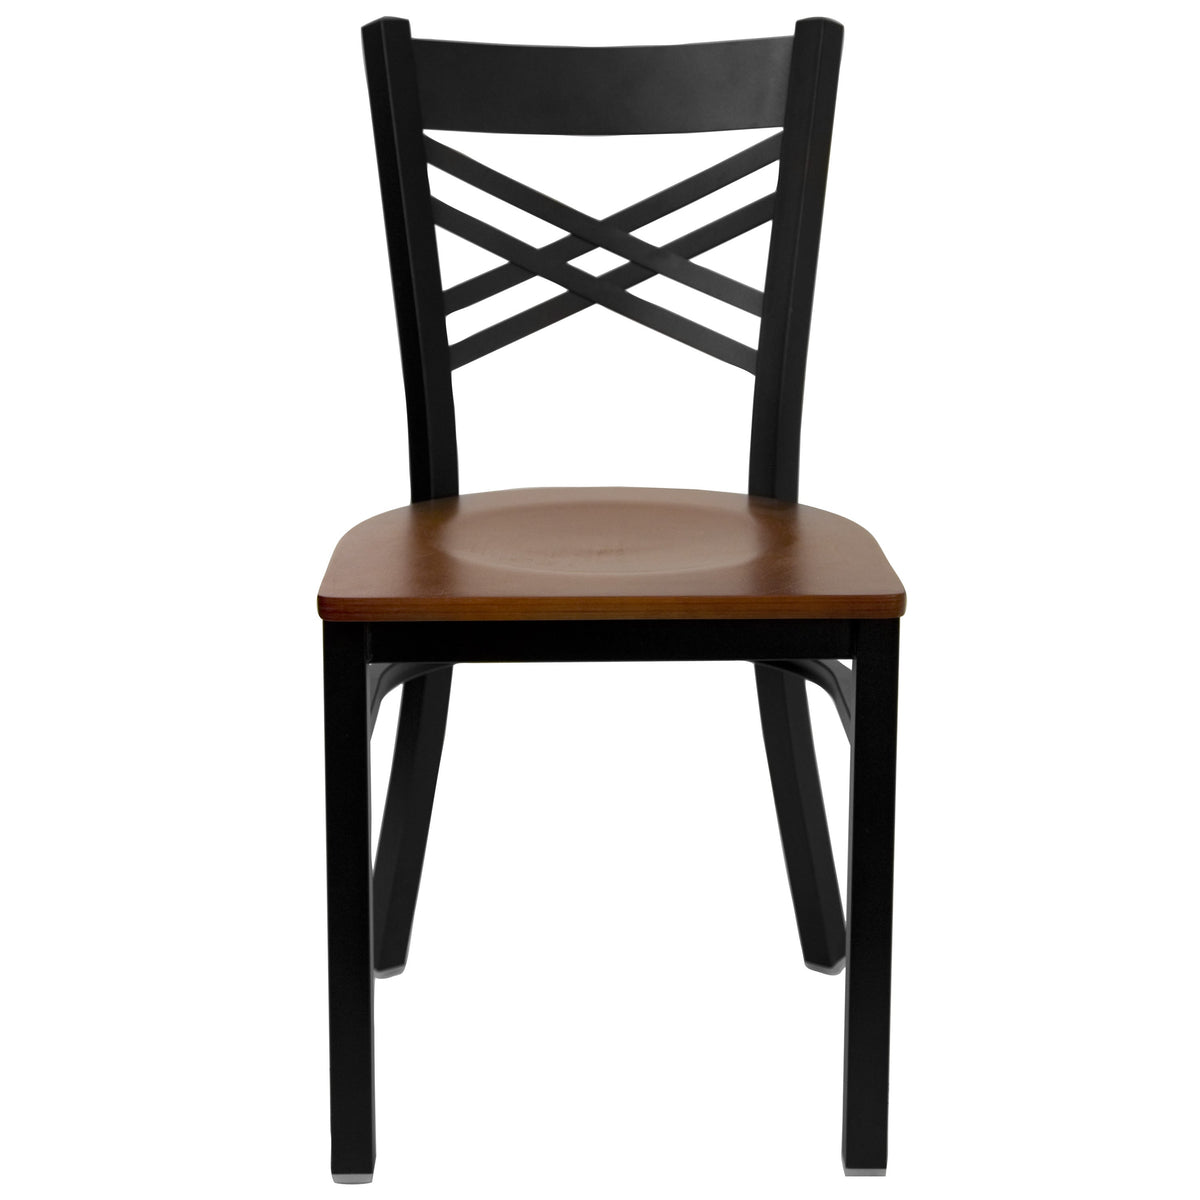 Cherry Wood Seat/Black Metal Frame |#| Black inchXinch Back Metal Restaurant Chair - Cherry Wood Seat